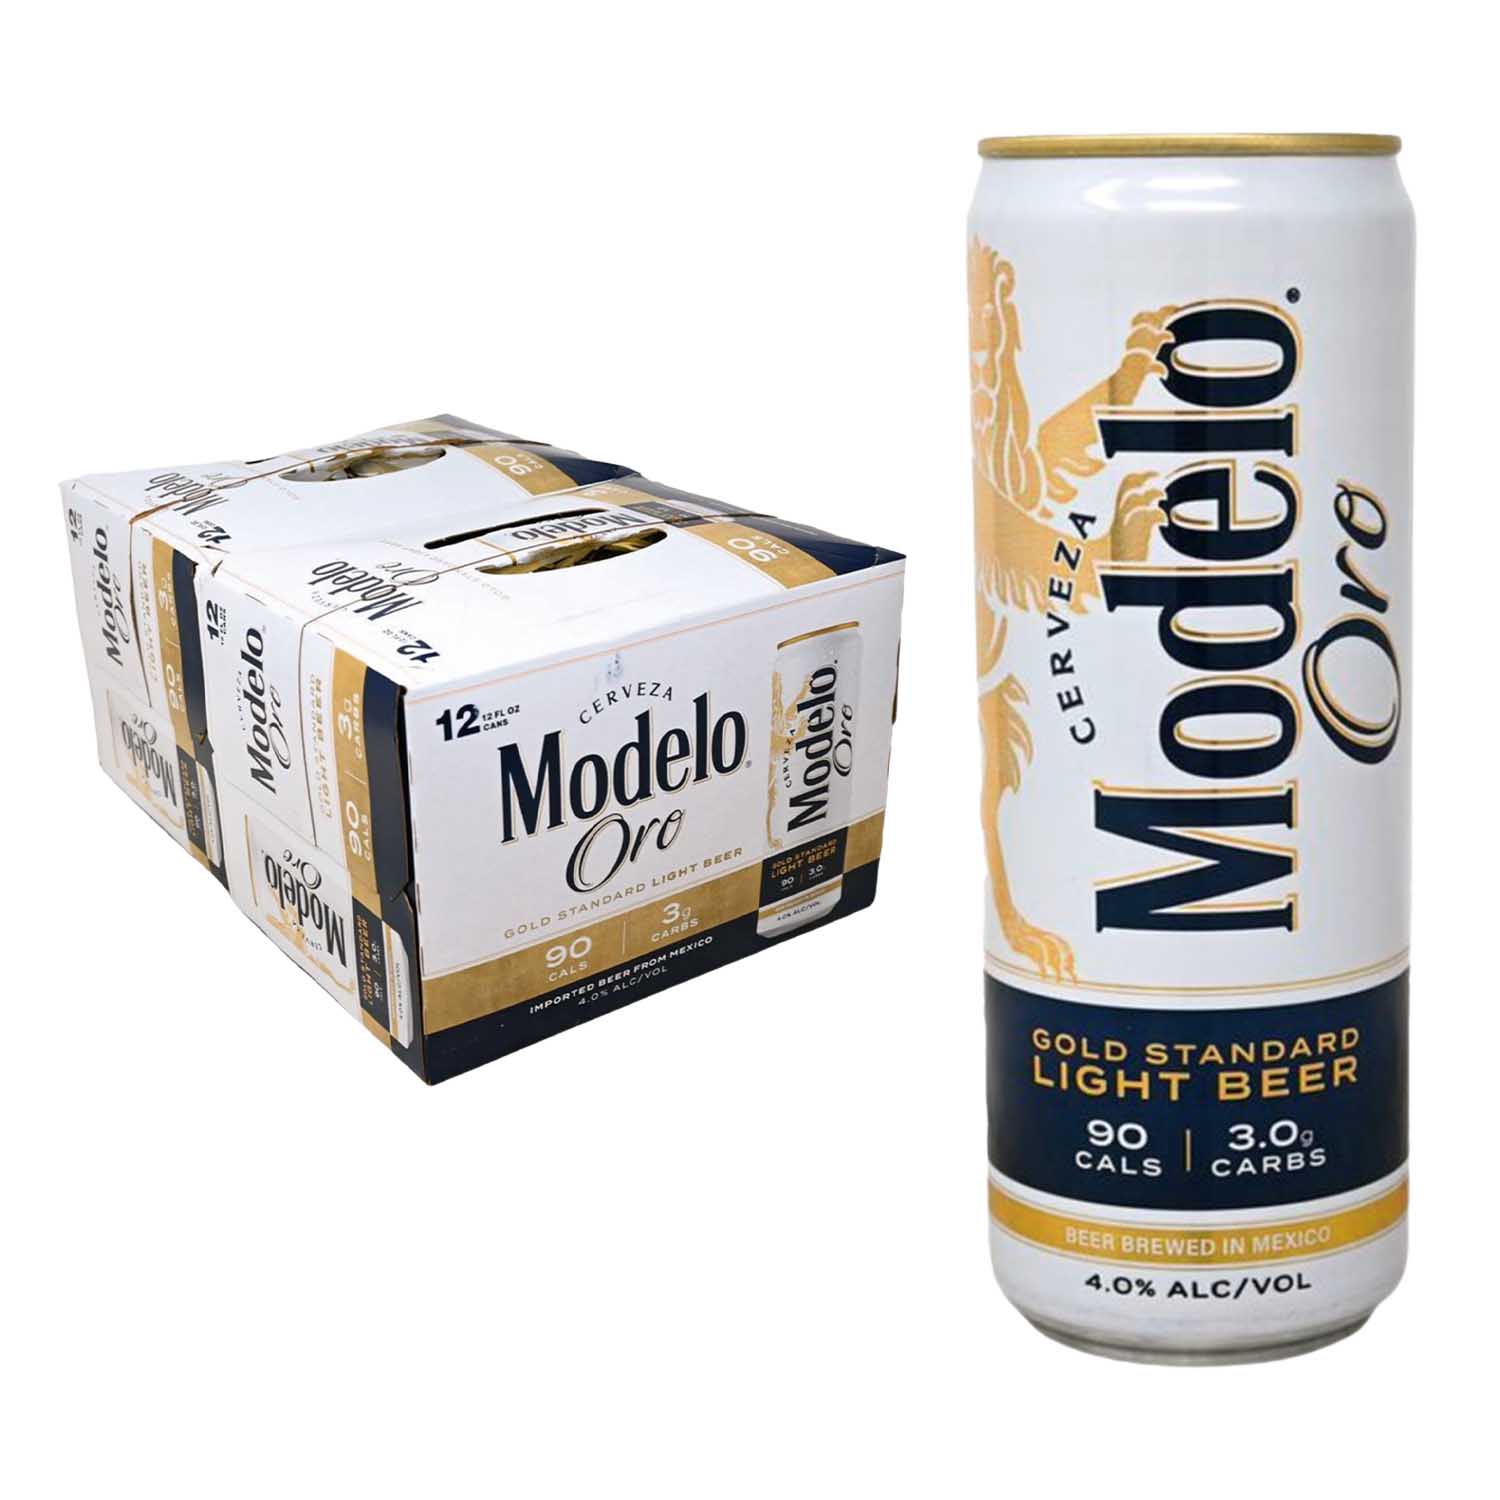 MODELO ORO | Stone's Beer & Beverage Market